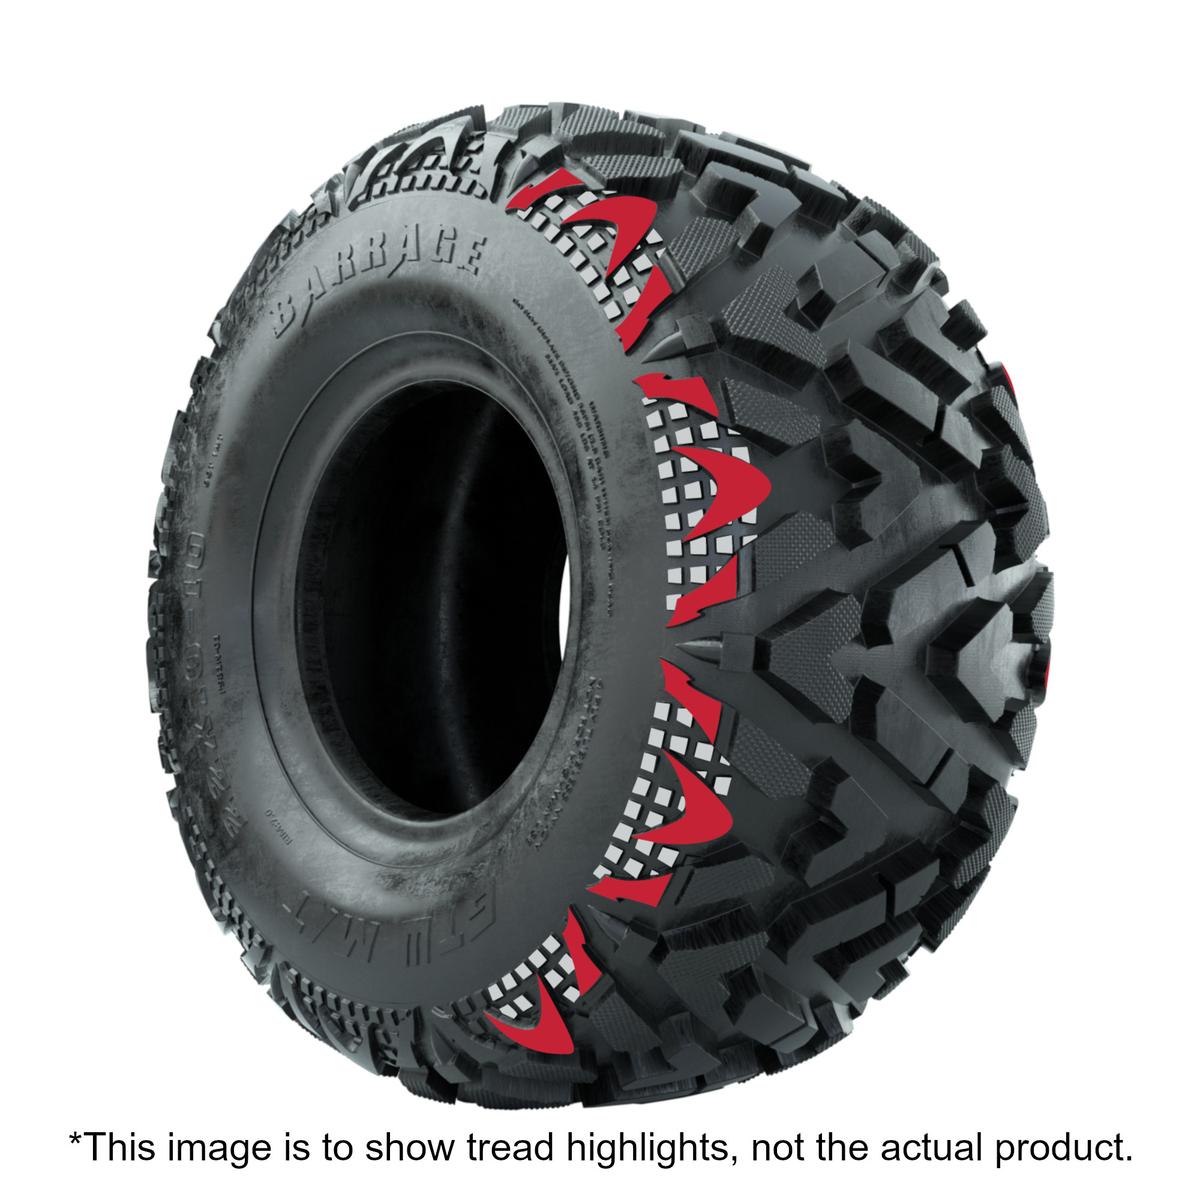 GTW Spyder Matte Black 10 in Wheels with 22x10-10 Barrage Mud Tires – Full Set